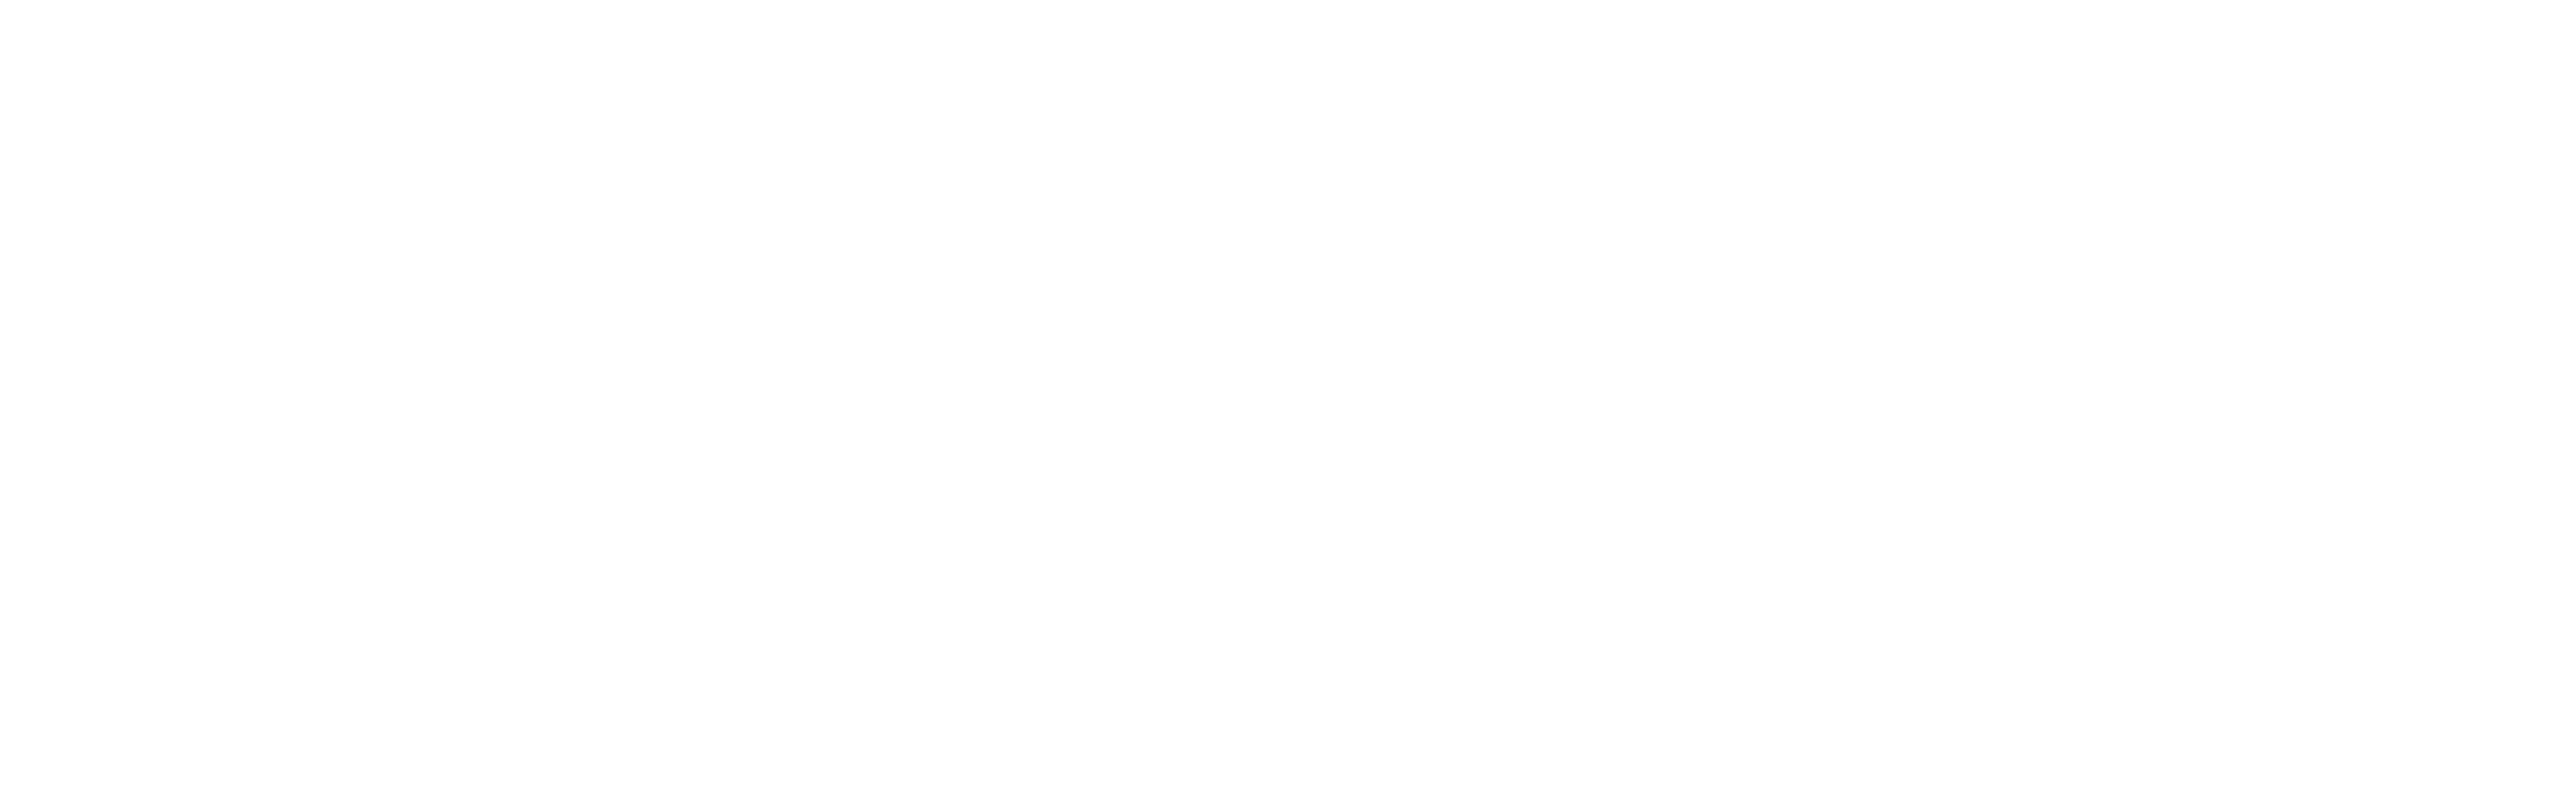 background wave patterns